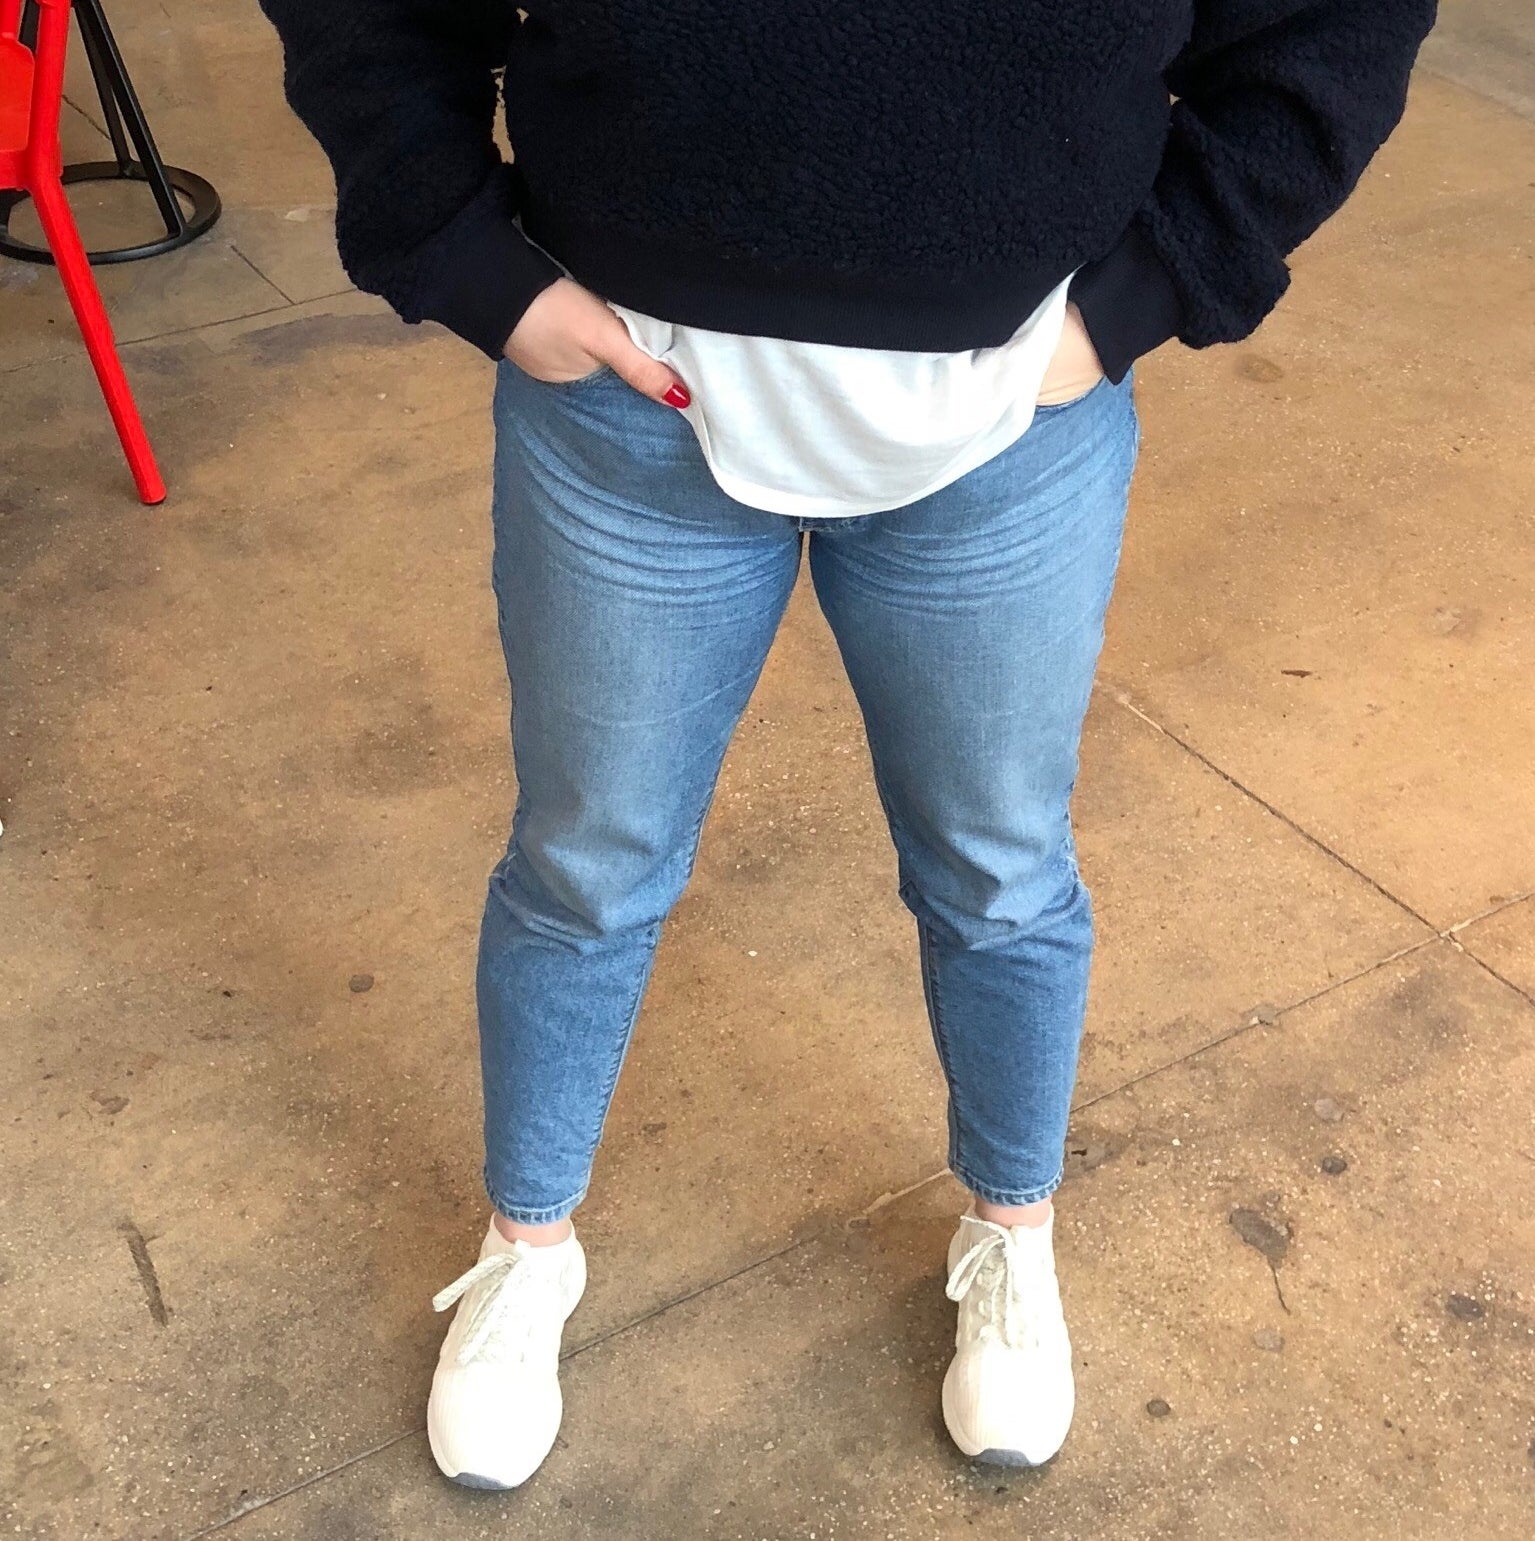 BuzzFeed Senior Writer Elena Garcia wearing the light blue jeans 